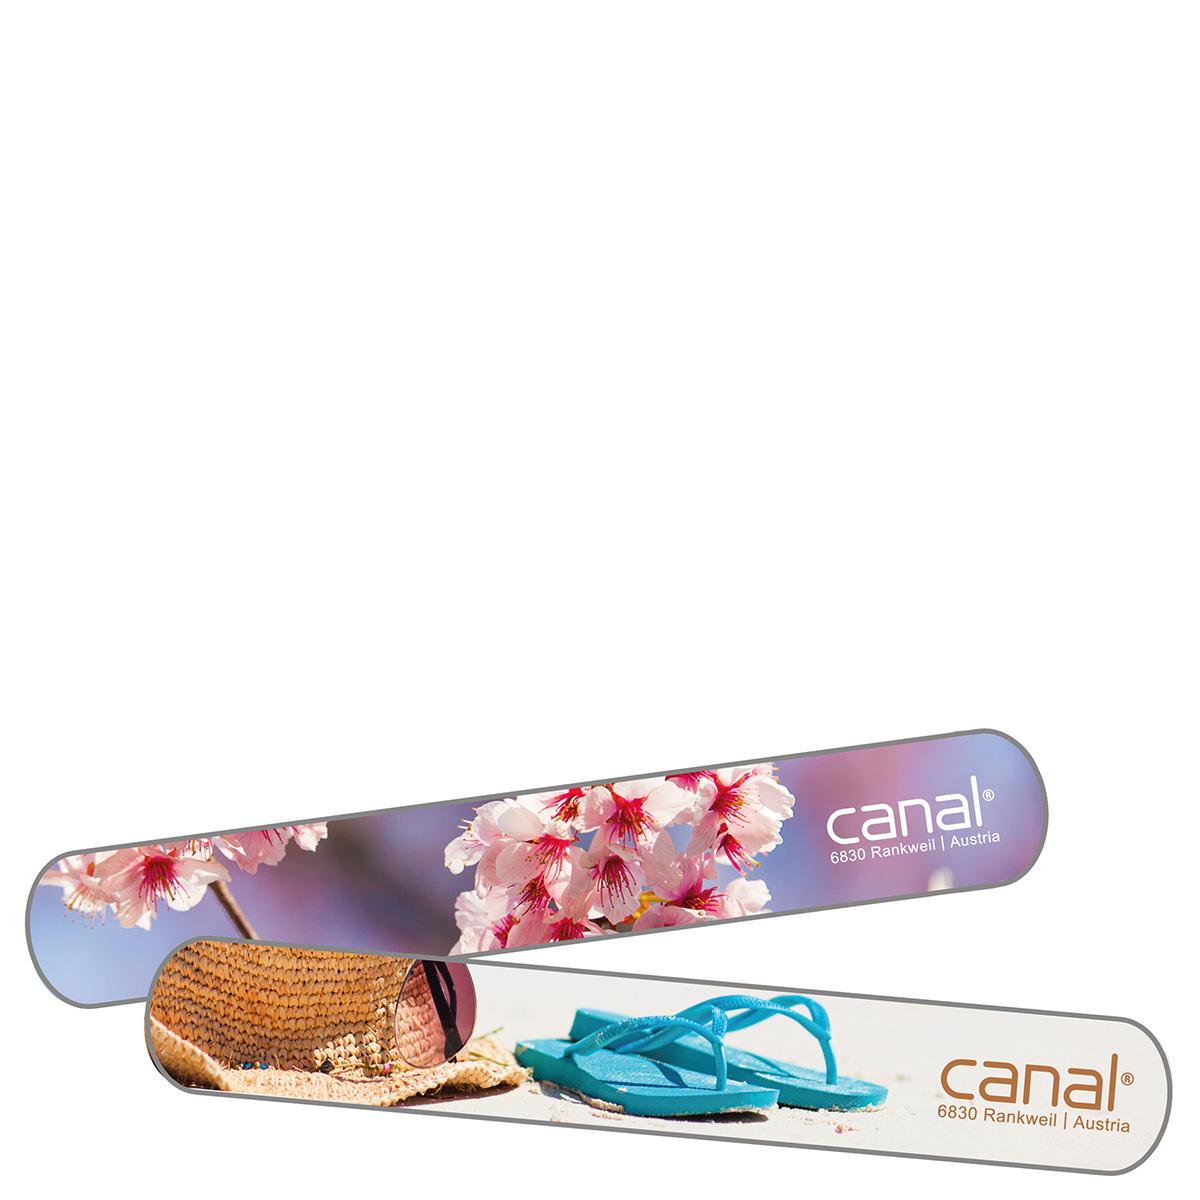 Canal Sandblattfeile Sommer  - 1